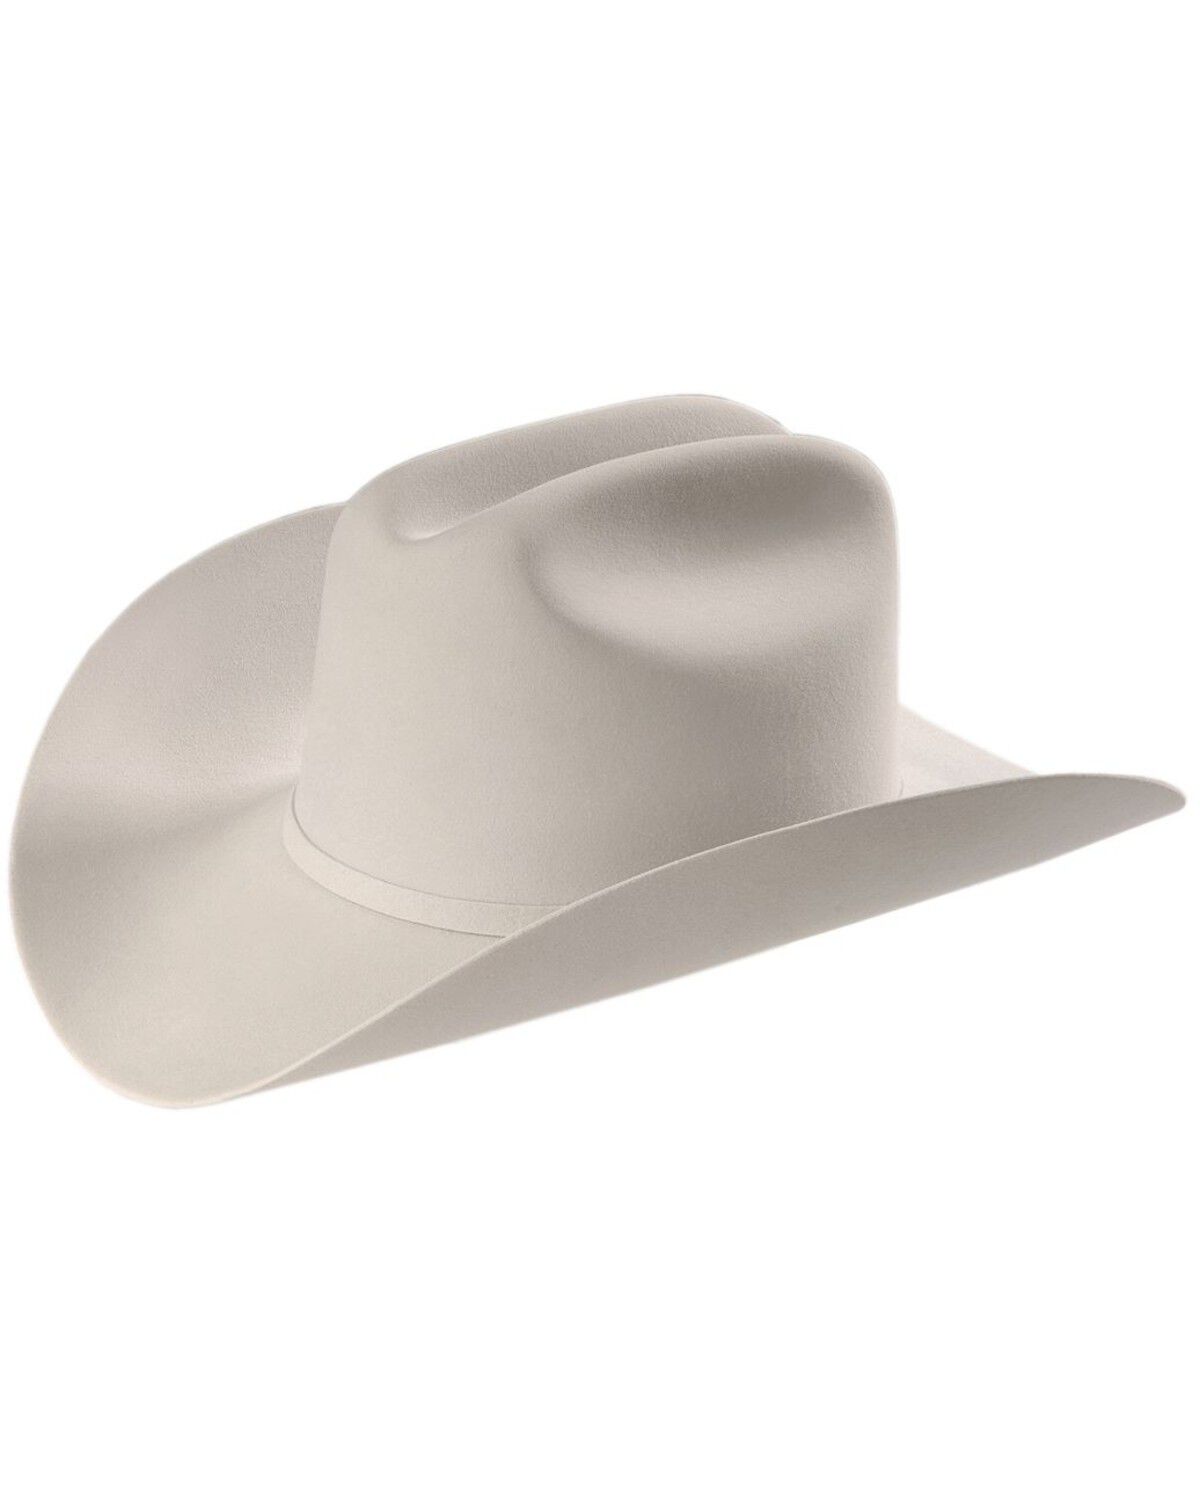 Larry Mahan Reno 6X Fur Felt Cowboy Hat White Made in USA 